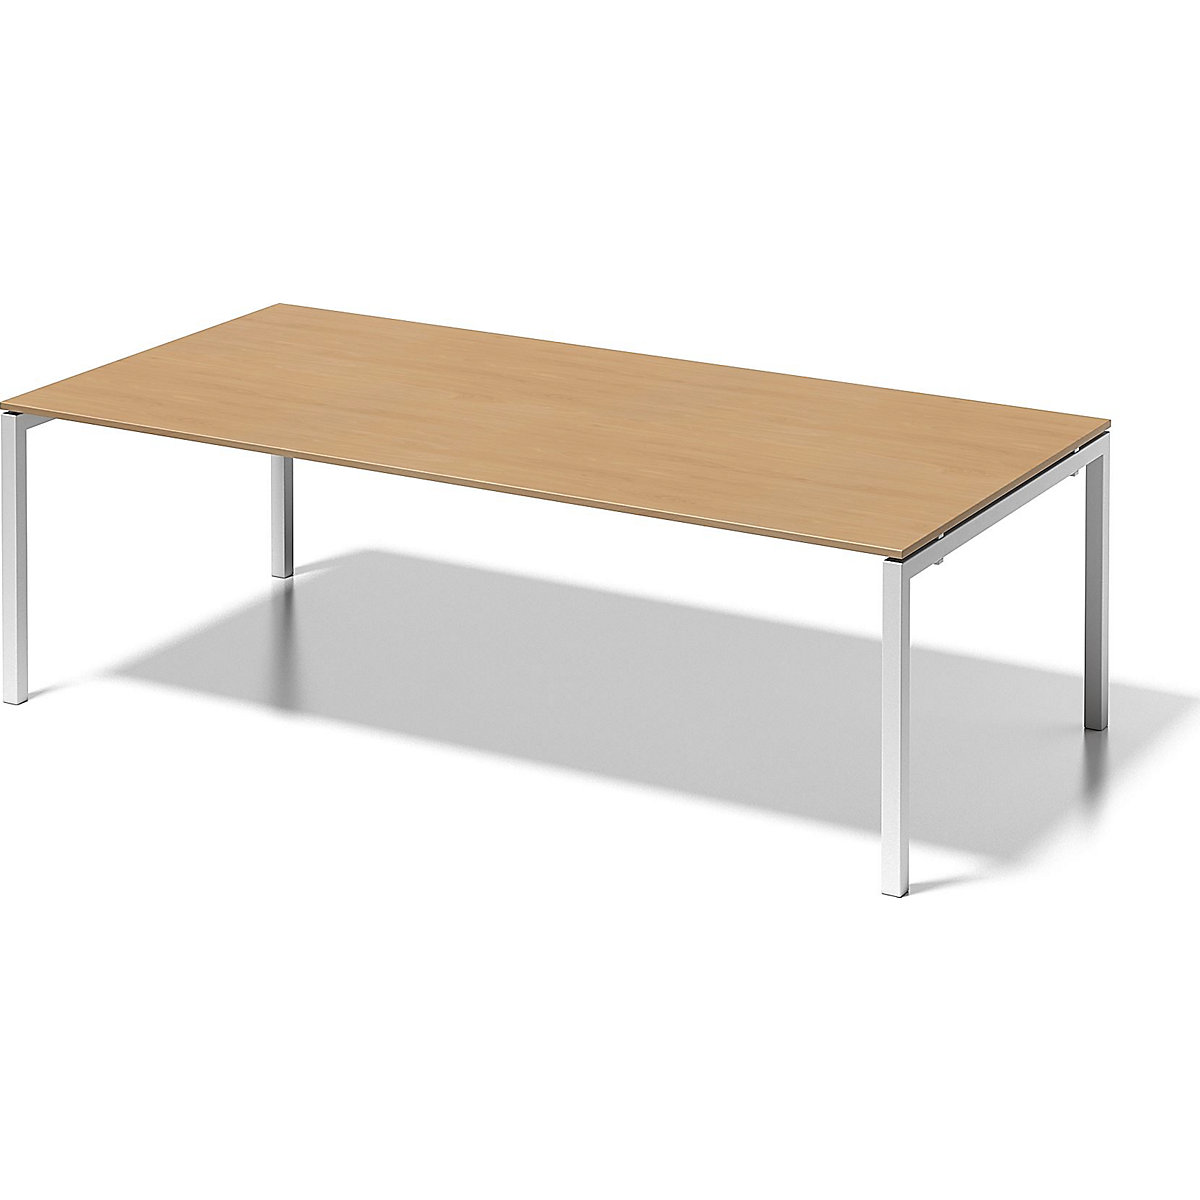 CITO desk, U-frame – BISLEY, HxWxD 740 x 2400 x 1200 mm, white frame, beech tabletop-5